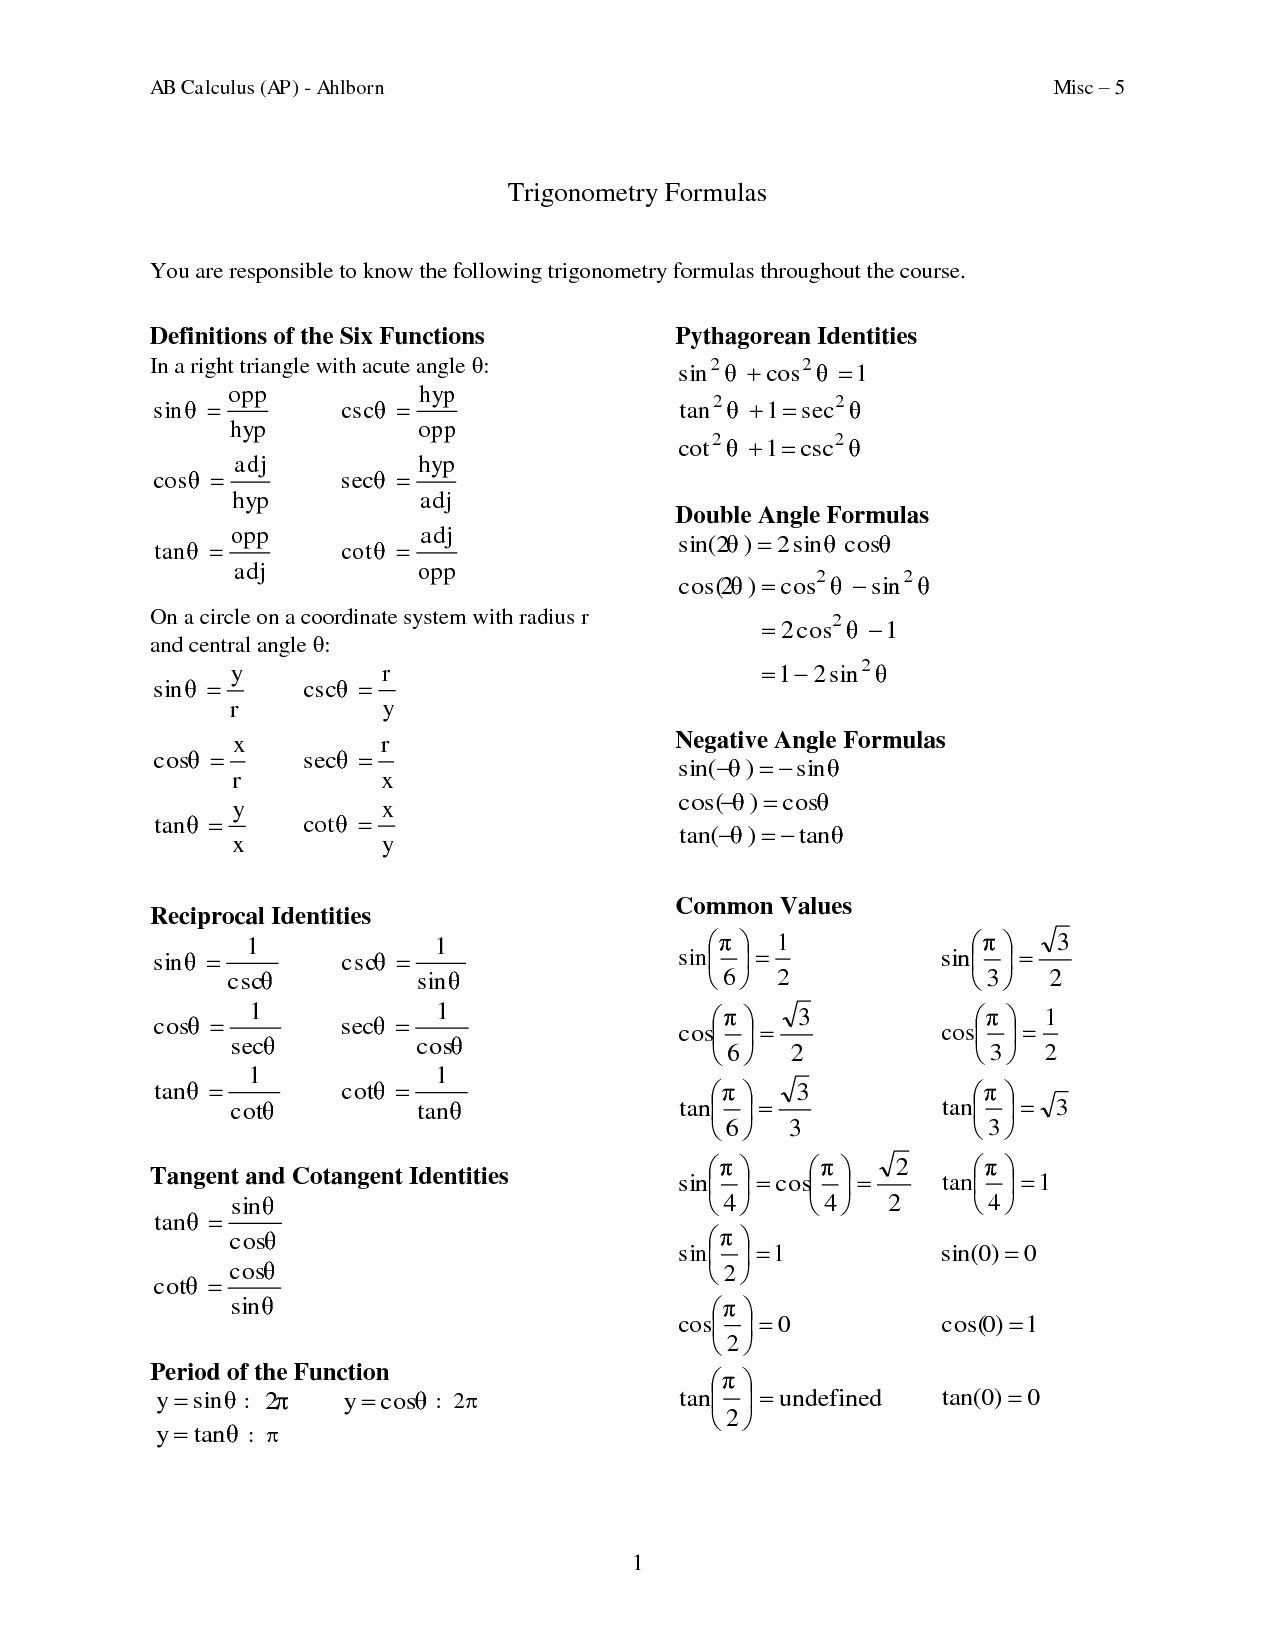 Right Triangle Trigonometry Worksheet 50 Right Triangle Trigonometry Worksheet In 2020